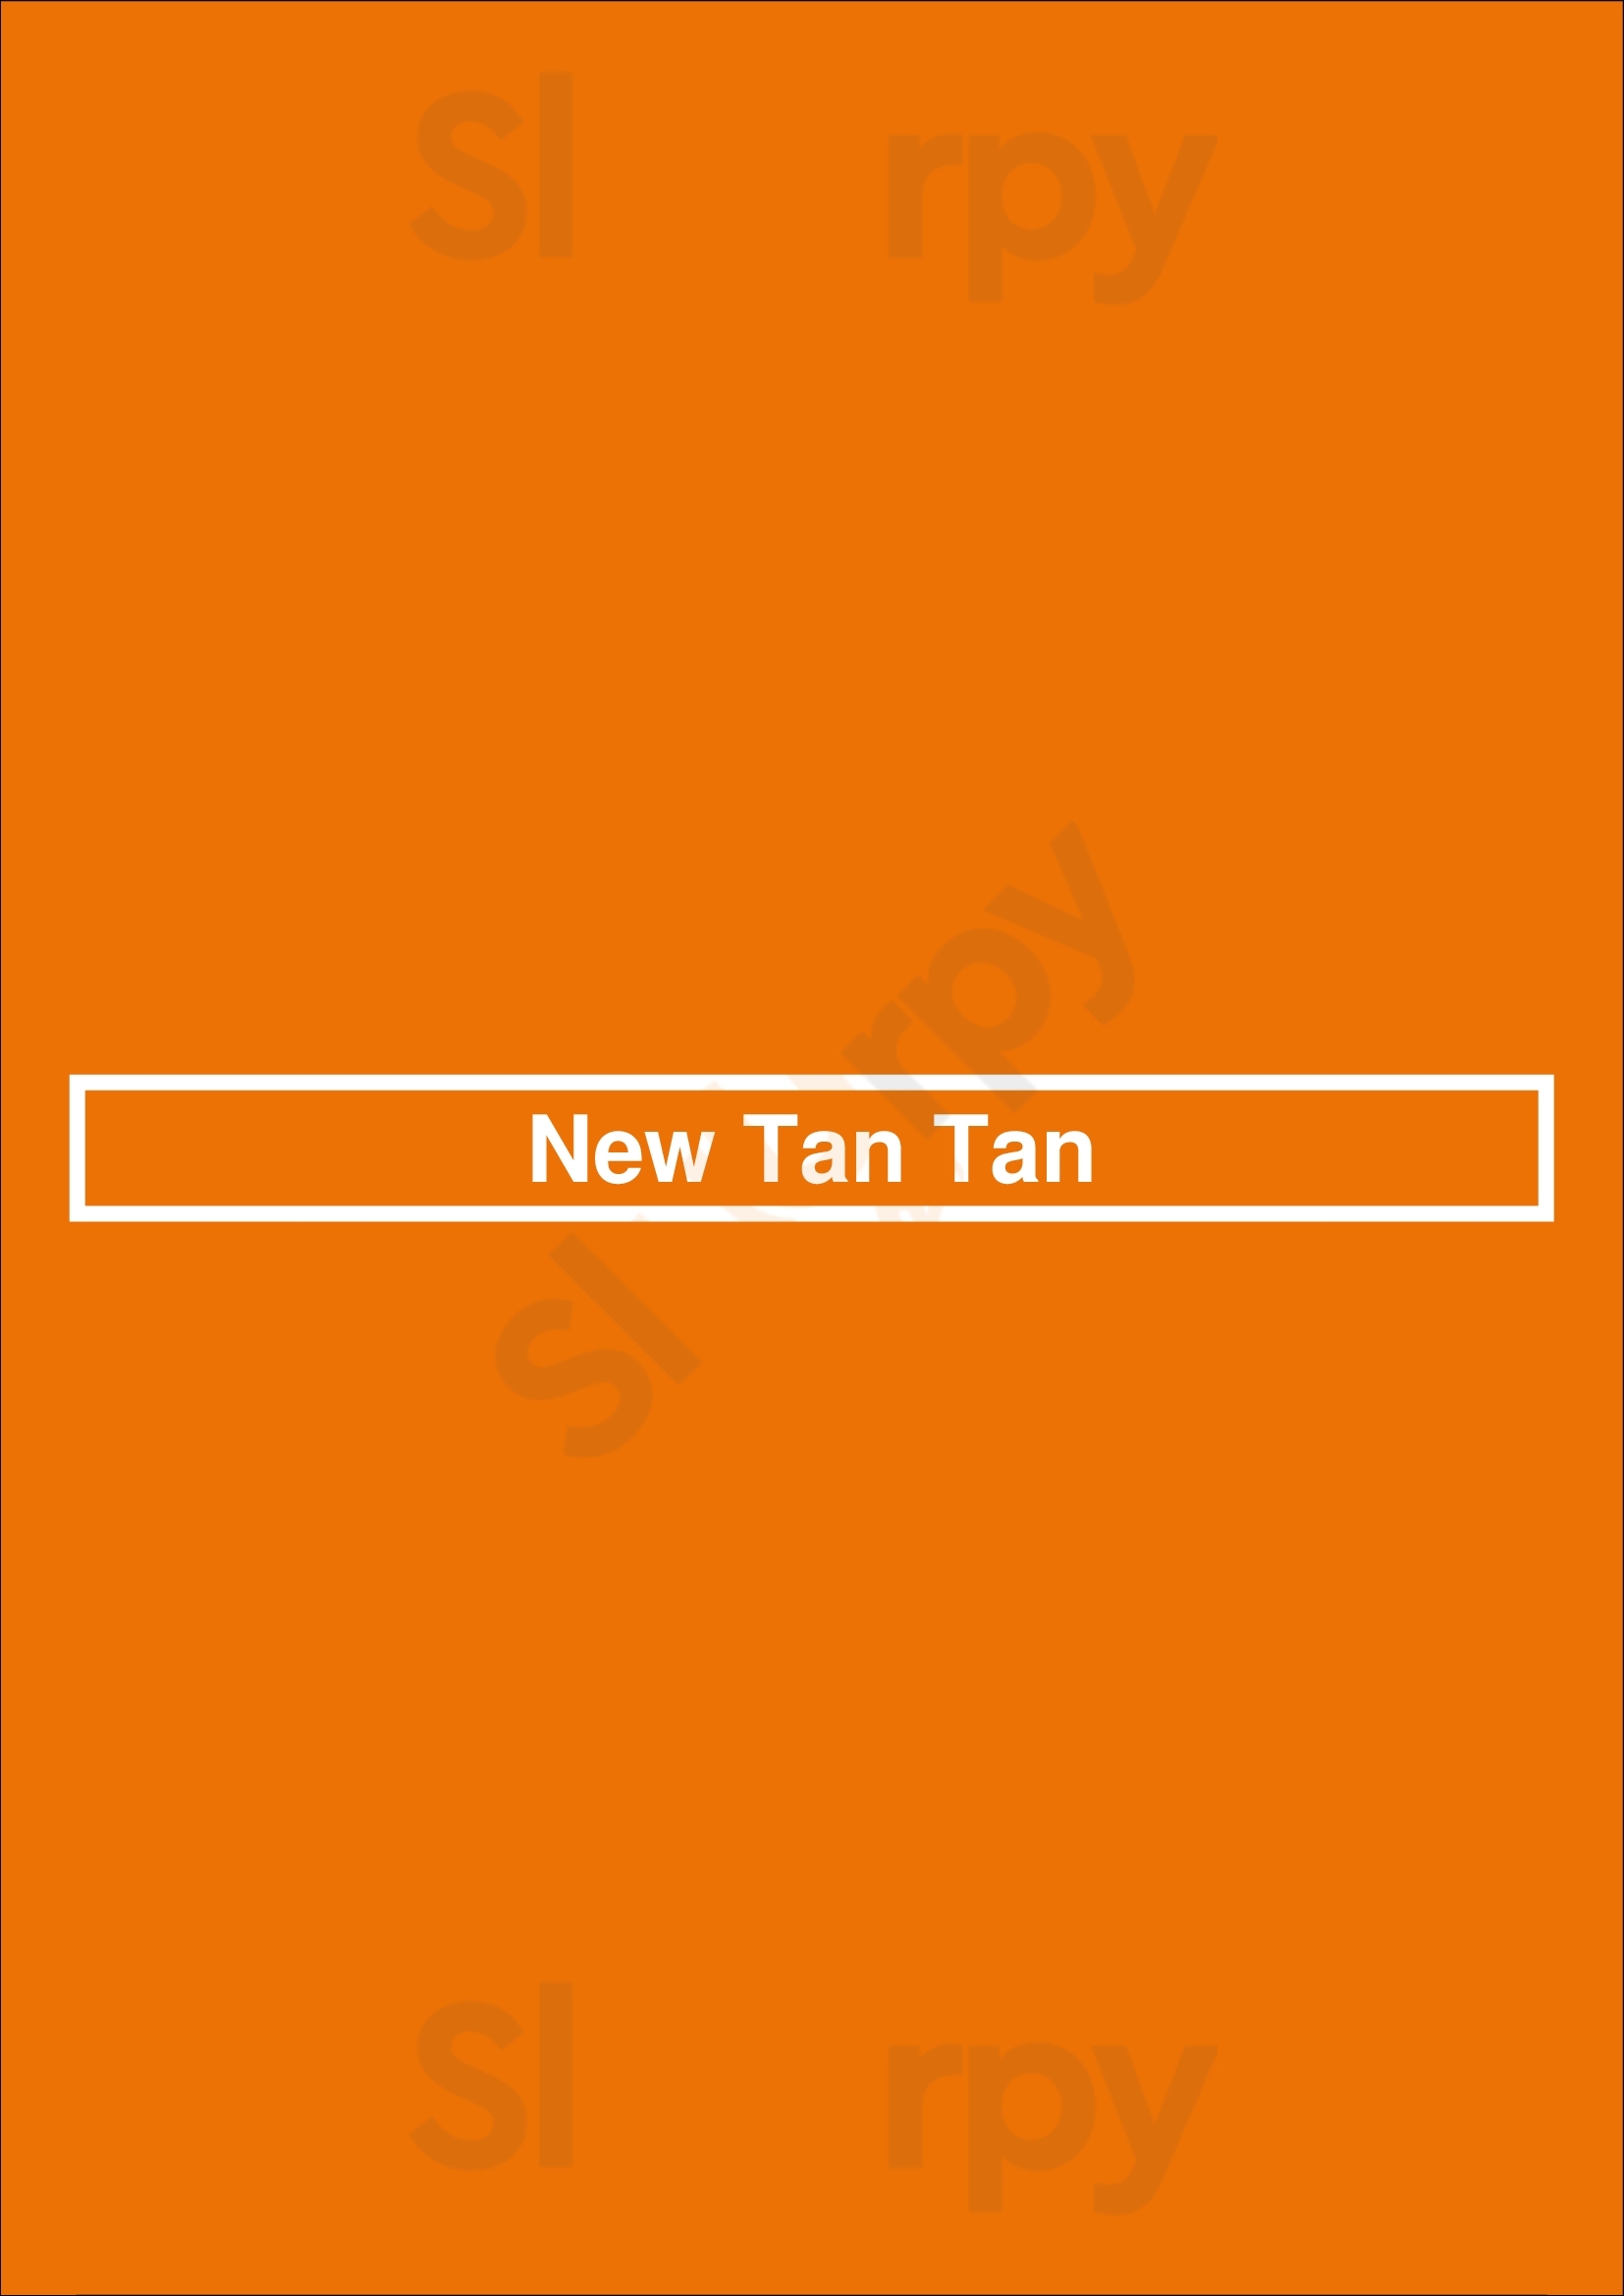 New Tan Tan Edmonton Menu - 1